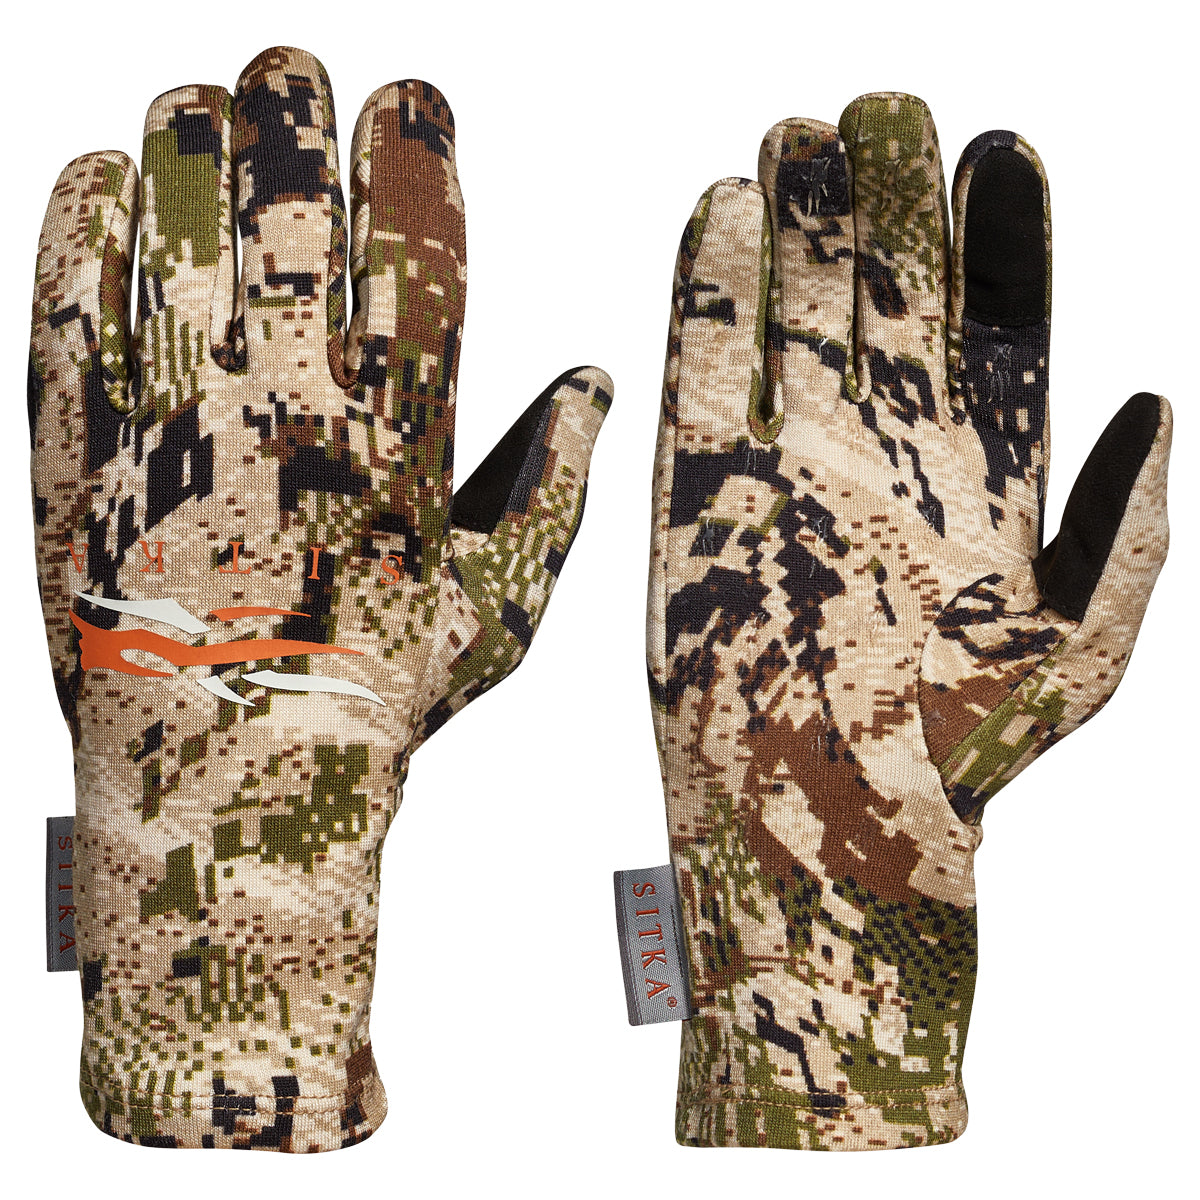 Sitka Merino 330 Glove